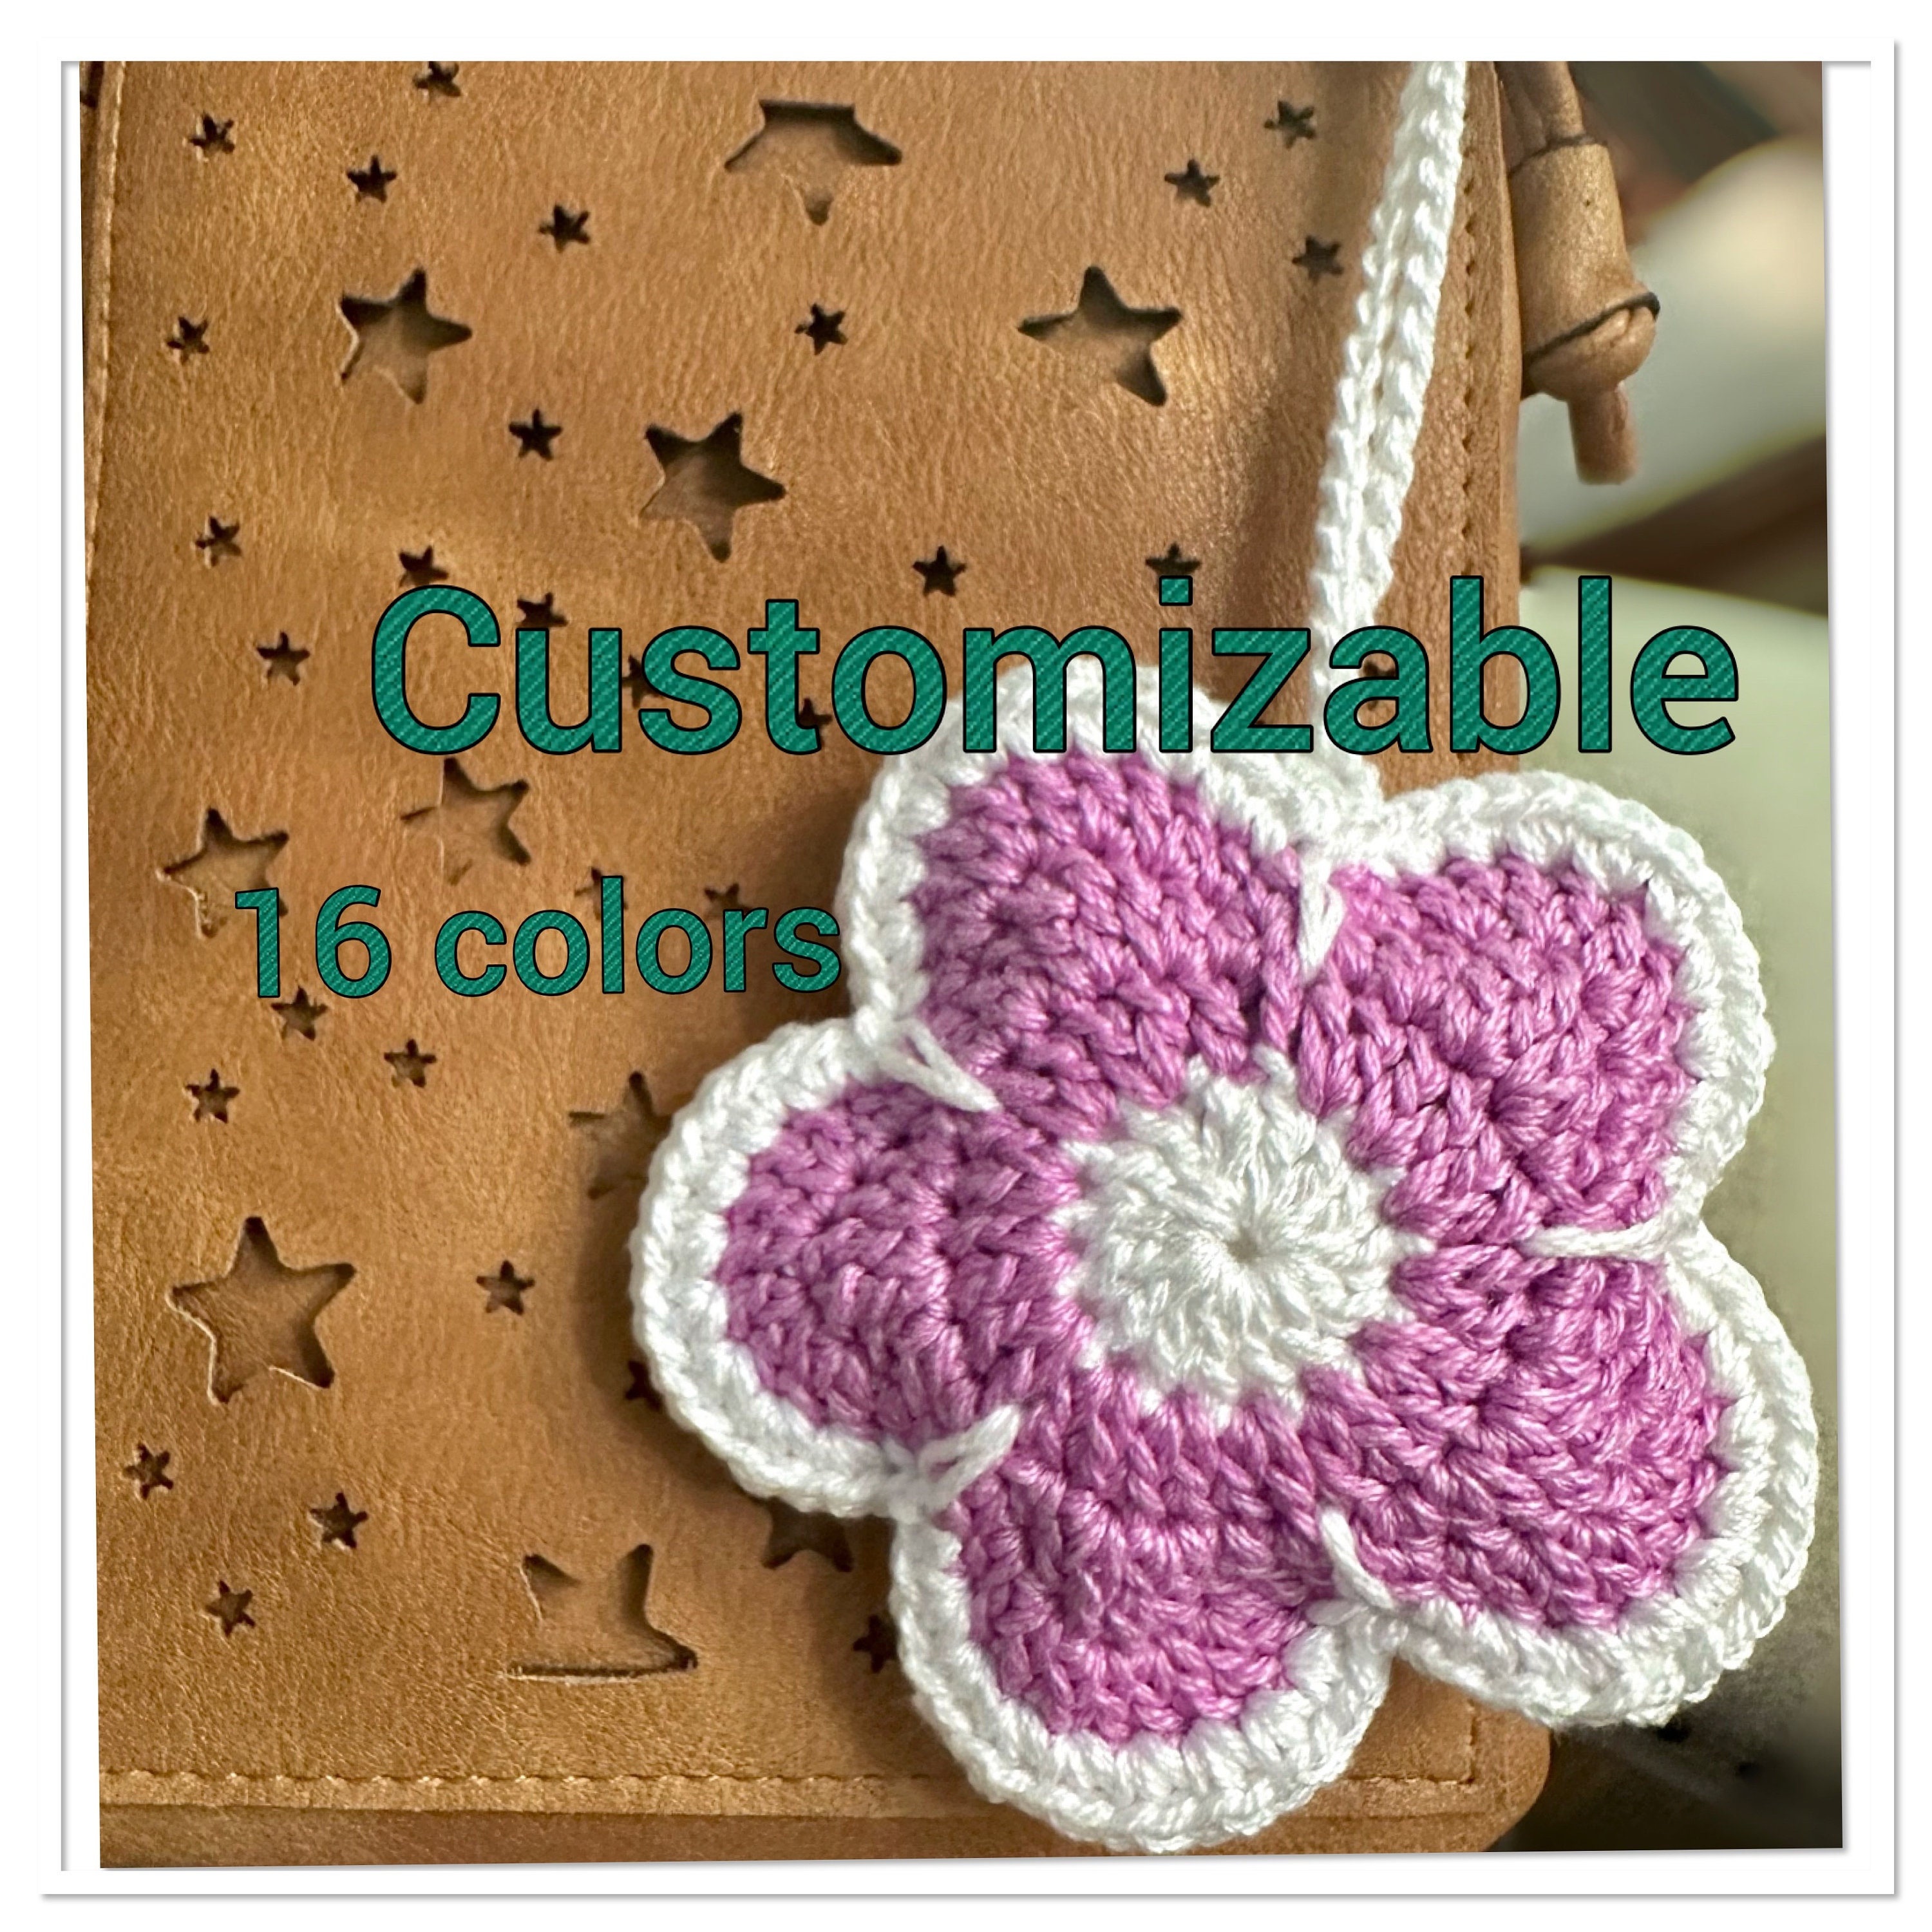 Buy Crochet Violet Flower Bag Online